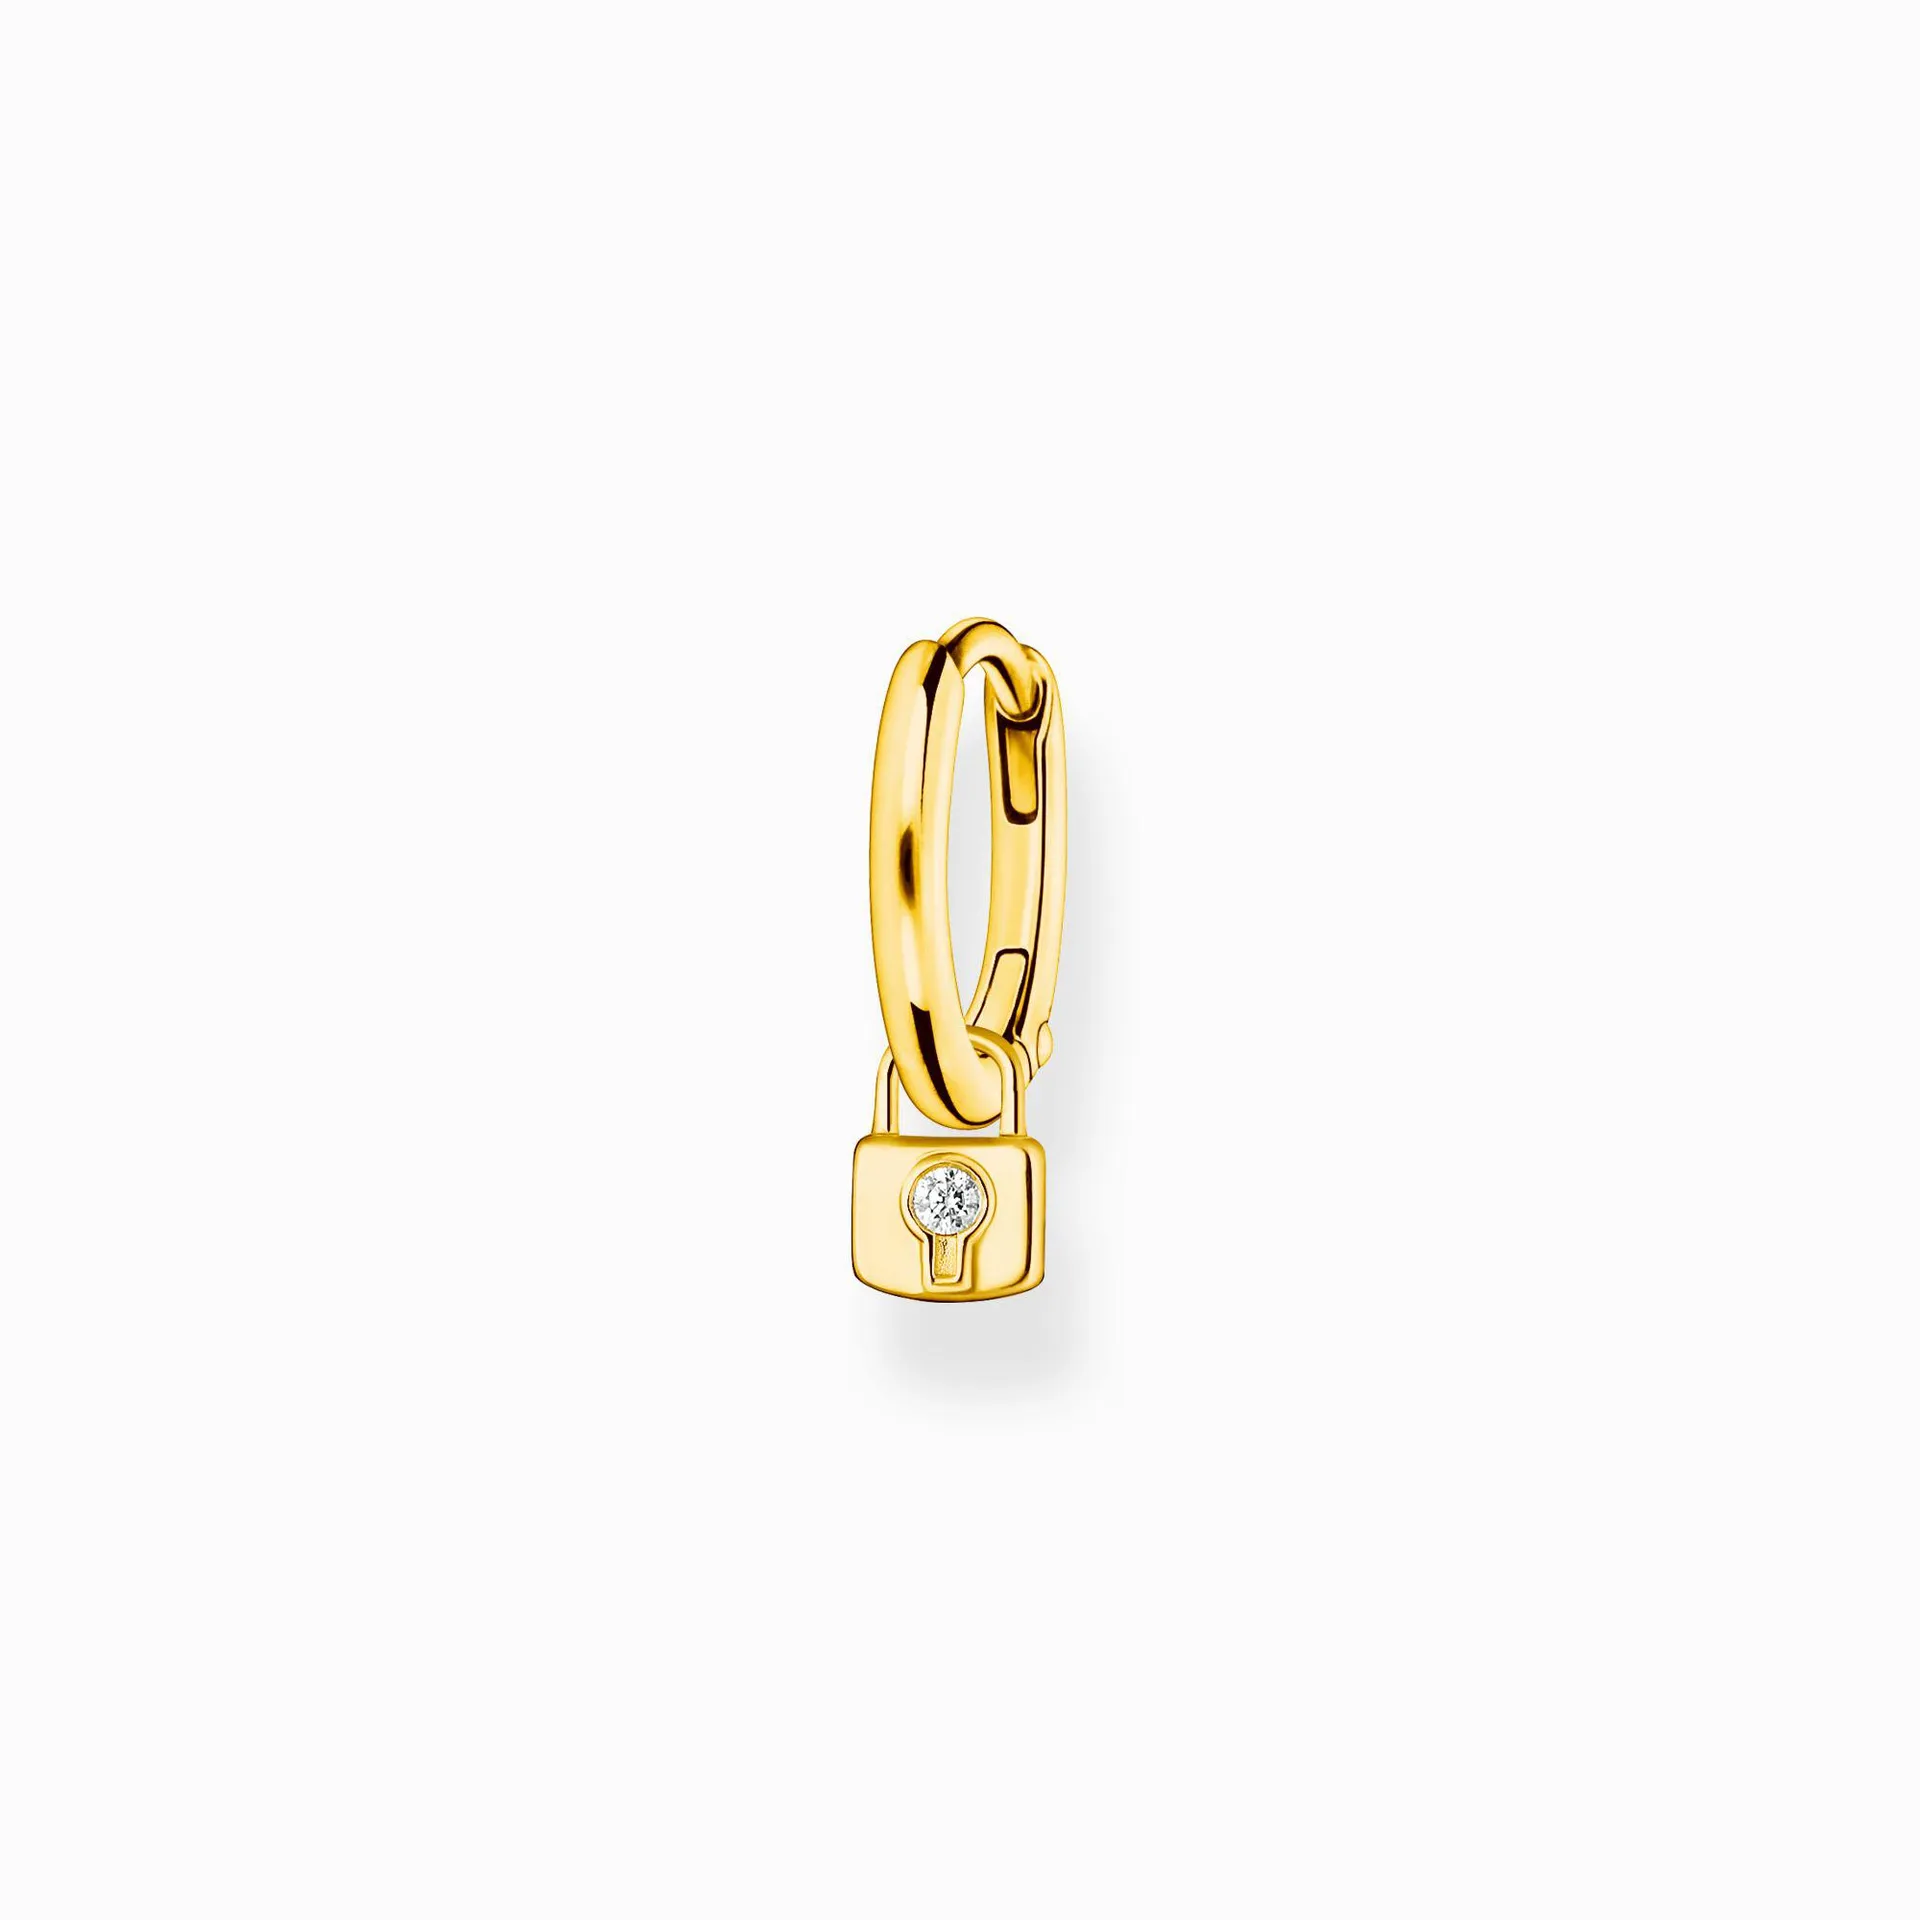 Single hoop earring with padlock pendant gold